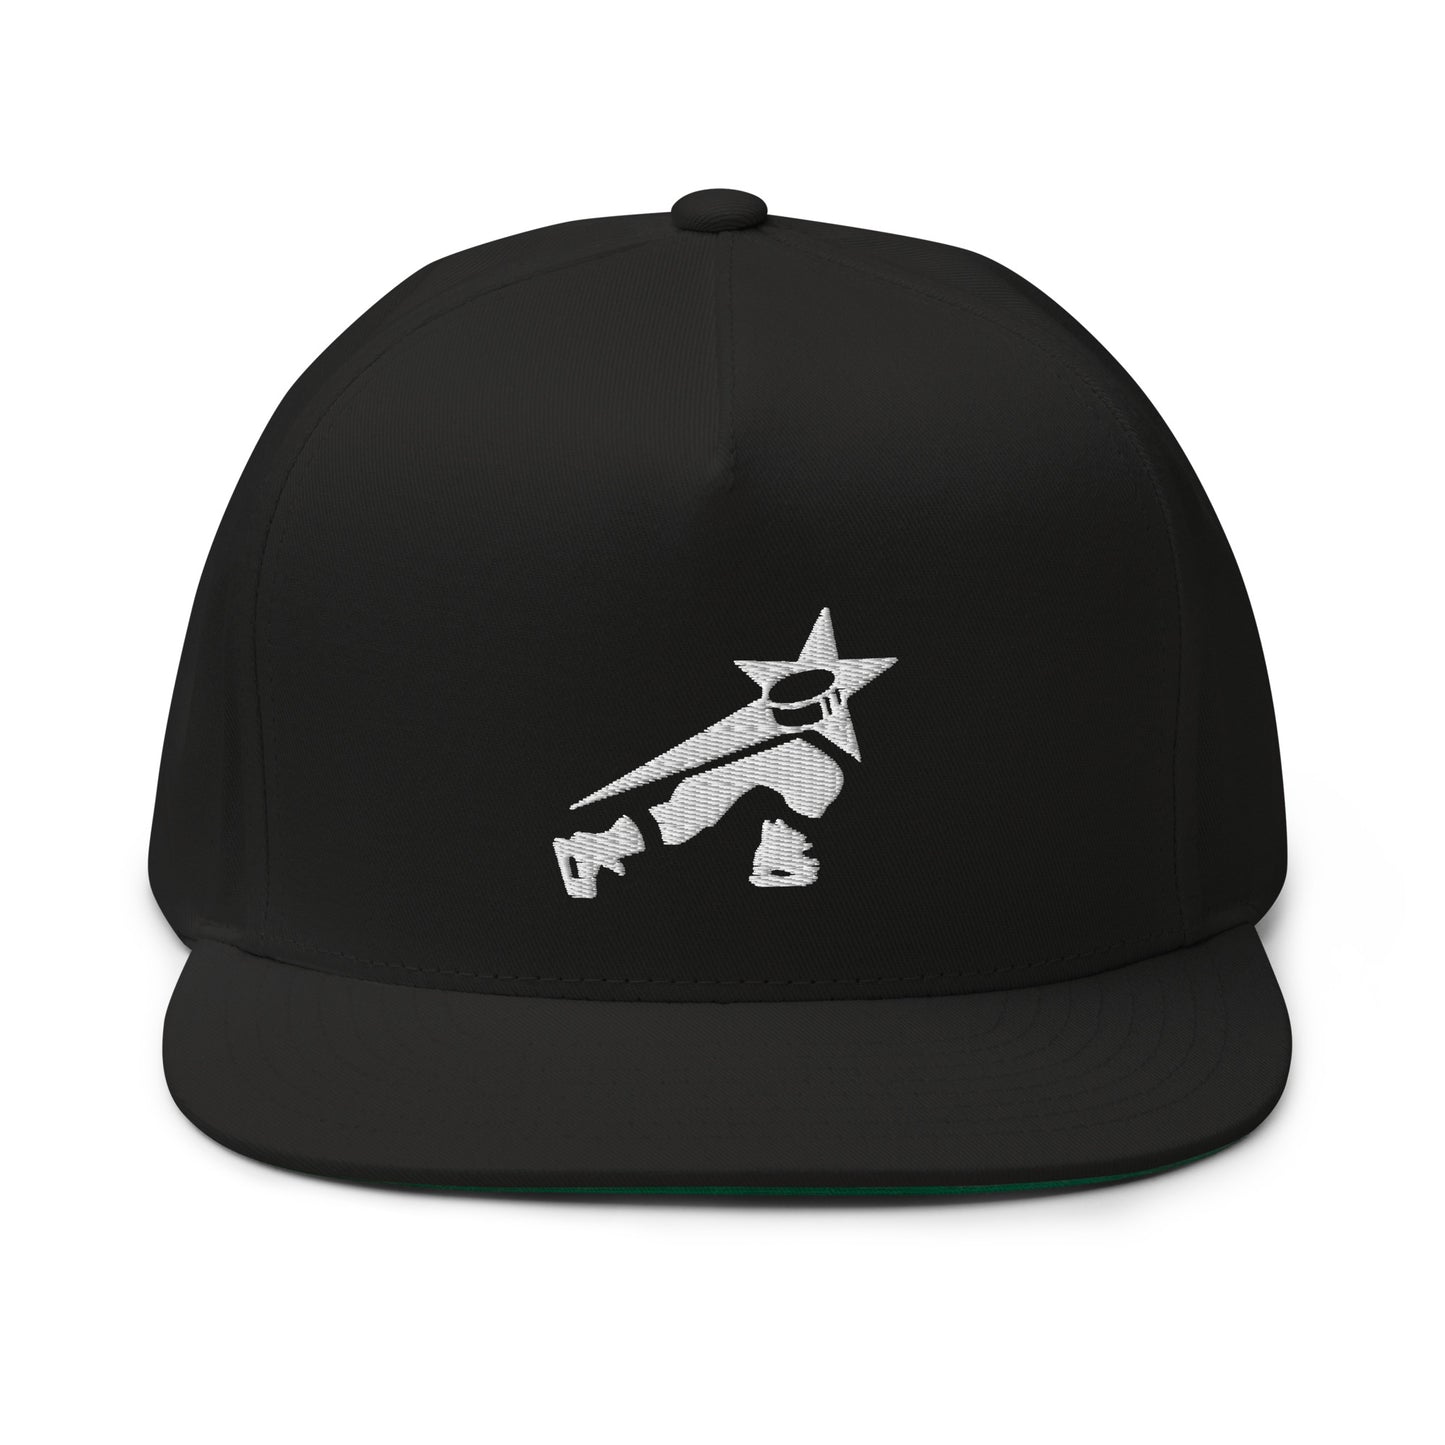 black snapback cap with a white hockey player logo